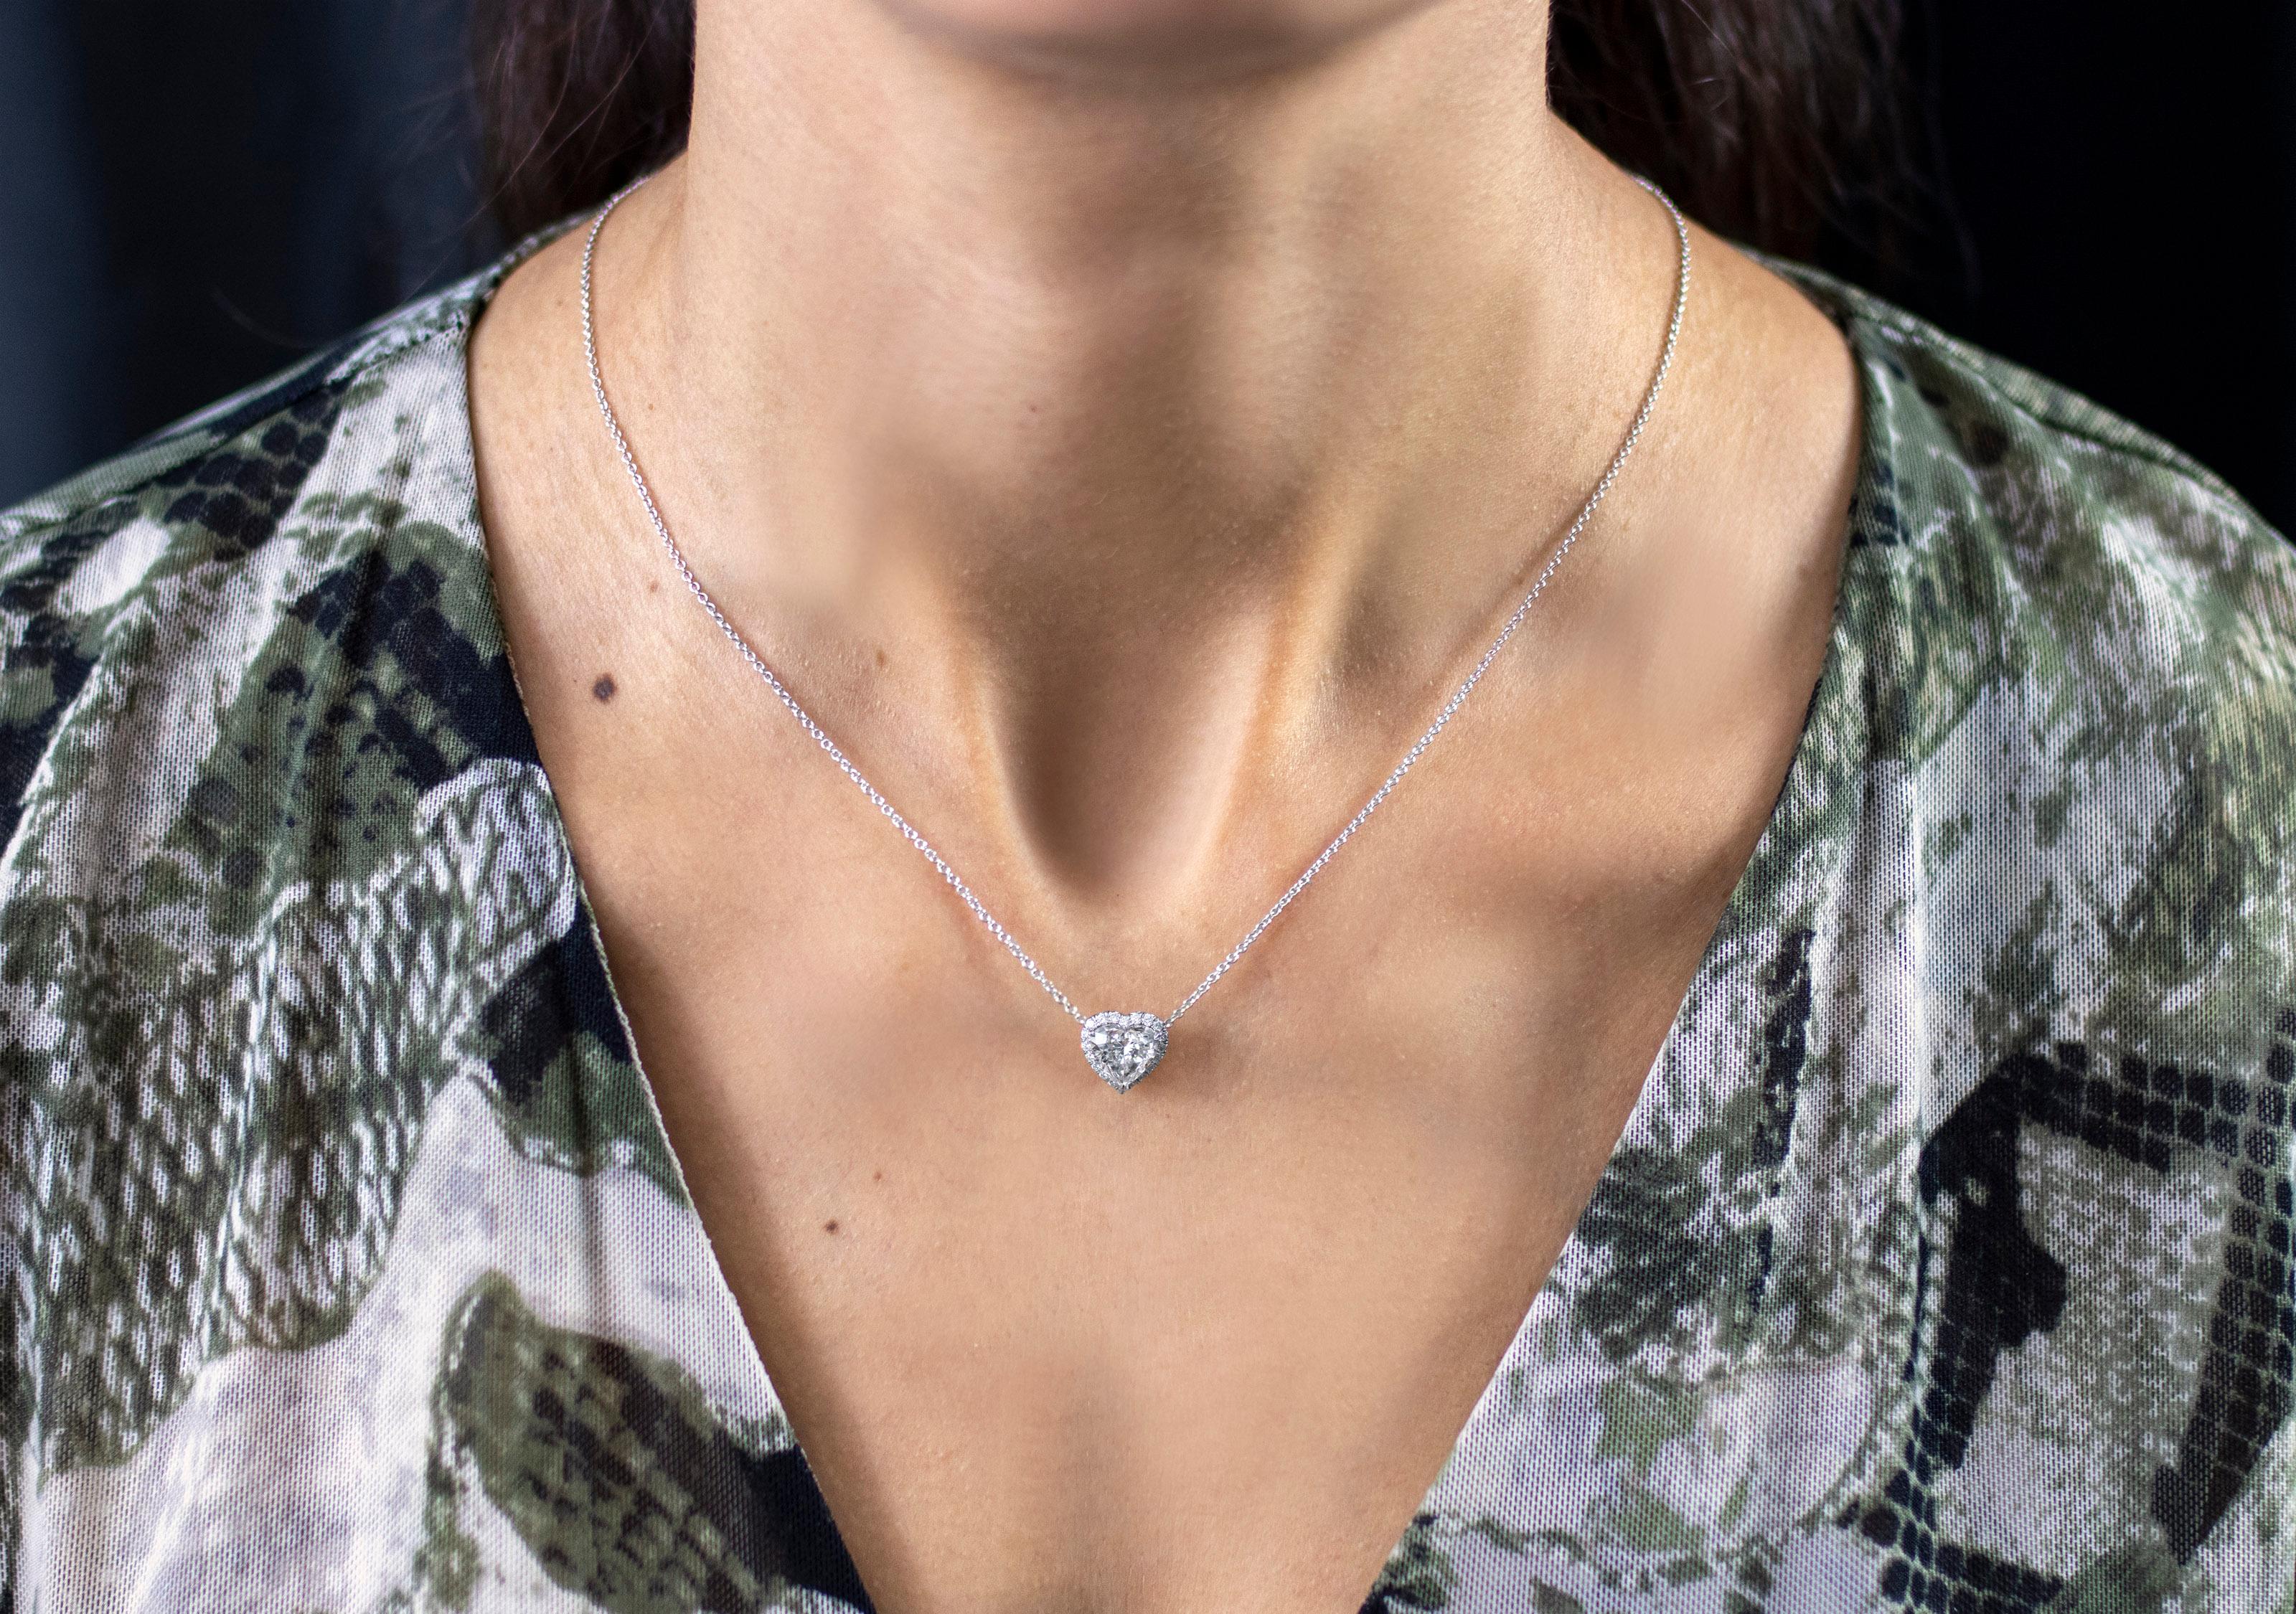 Contemporary Roman Malakov Gia Certified 1.80 Carat Heart Shape Diamond Pendant Halo Necklace For Sale